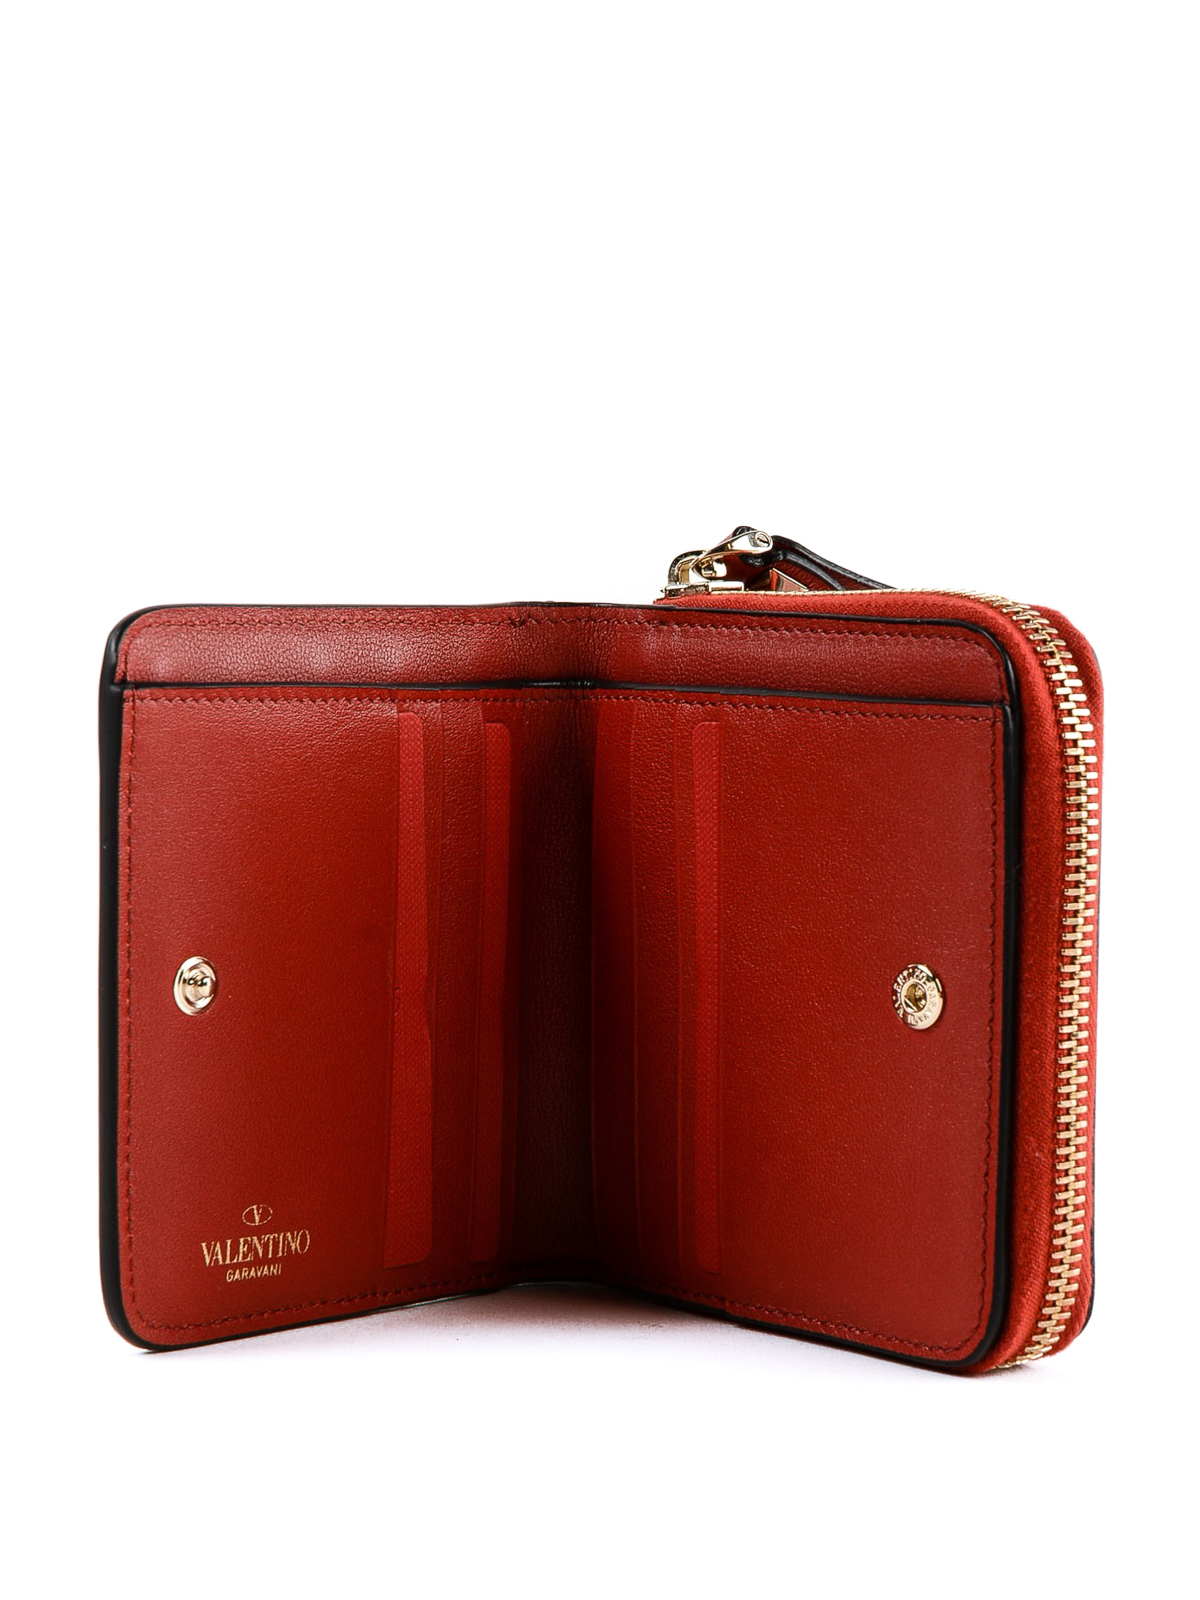 Wallets & purses Valentino Garavani - Rockstud red leather french